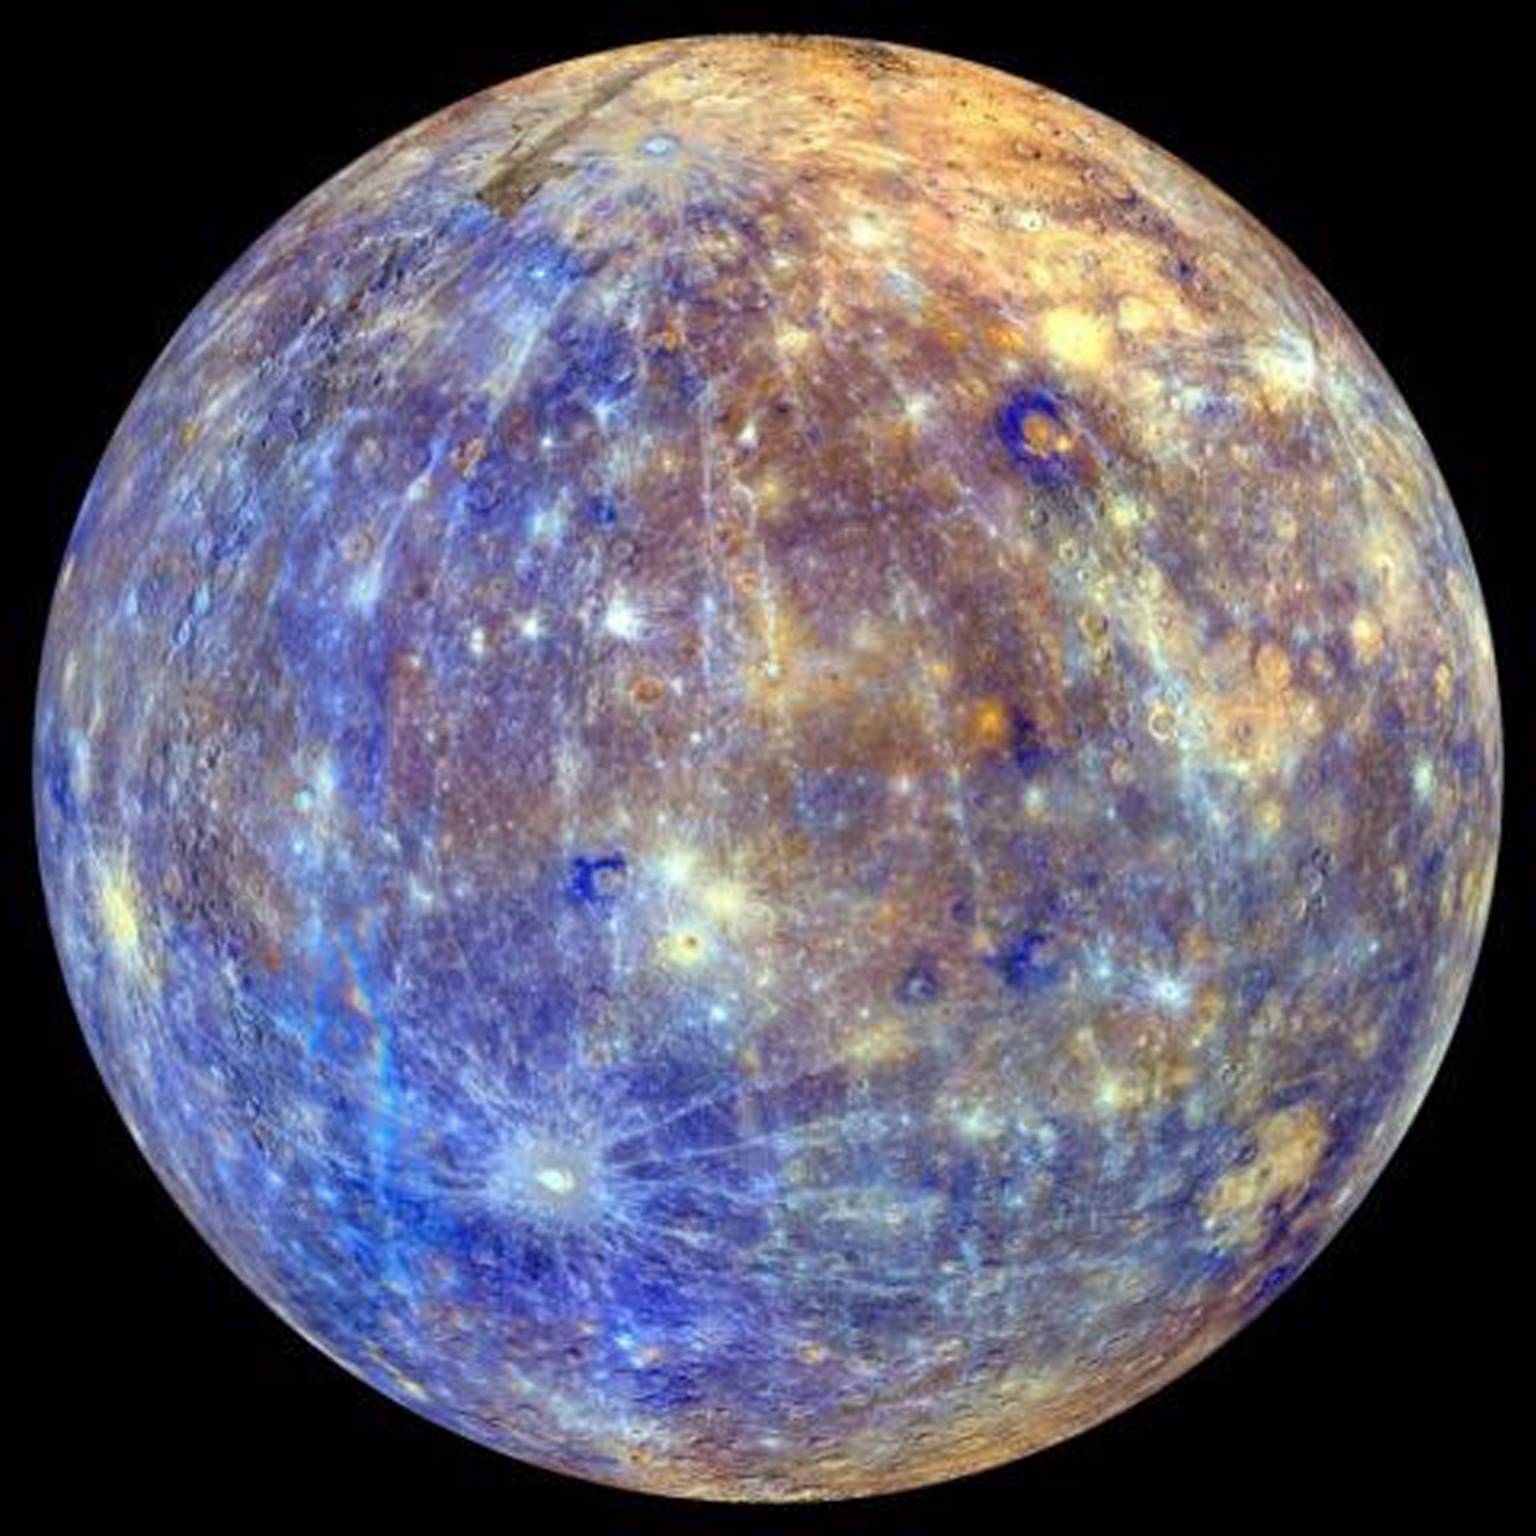 Gamma Ray and Neutron Spectrometer – NASA’s MESSENGER spacecraft mission to Mercury